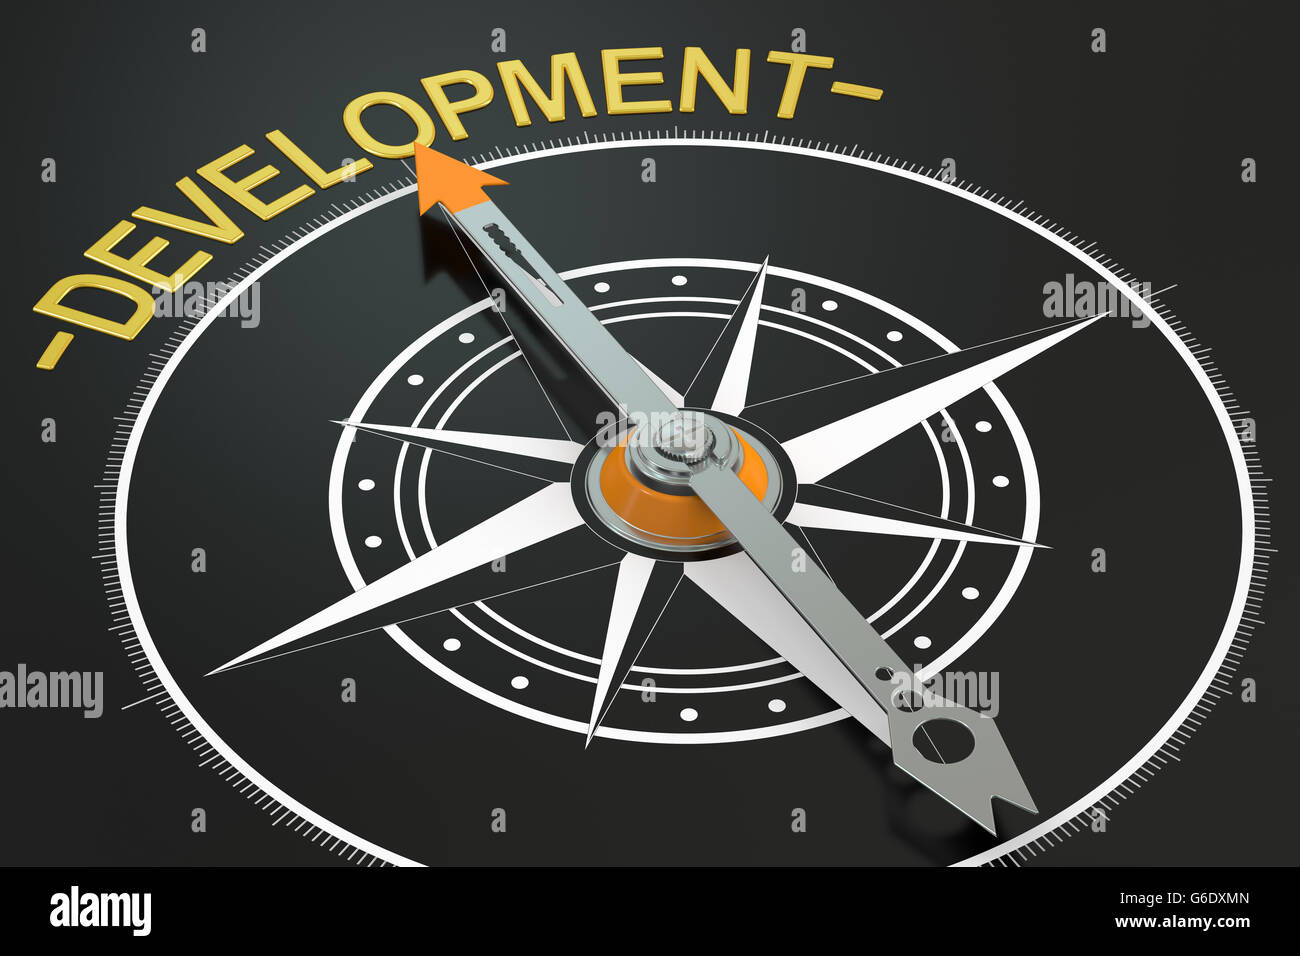 Development compass concept, 3D rendering Stock Photo